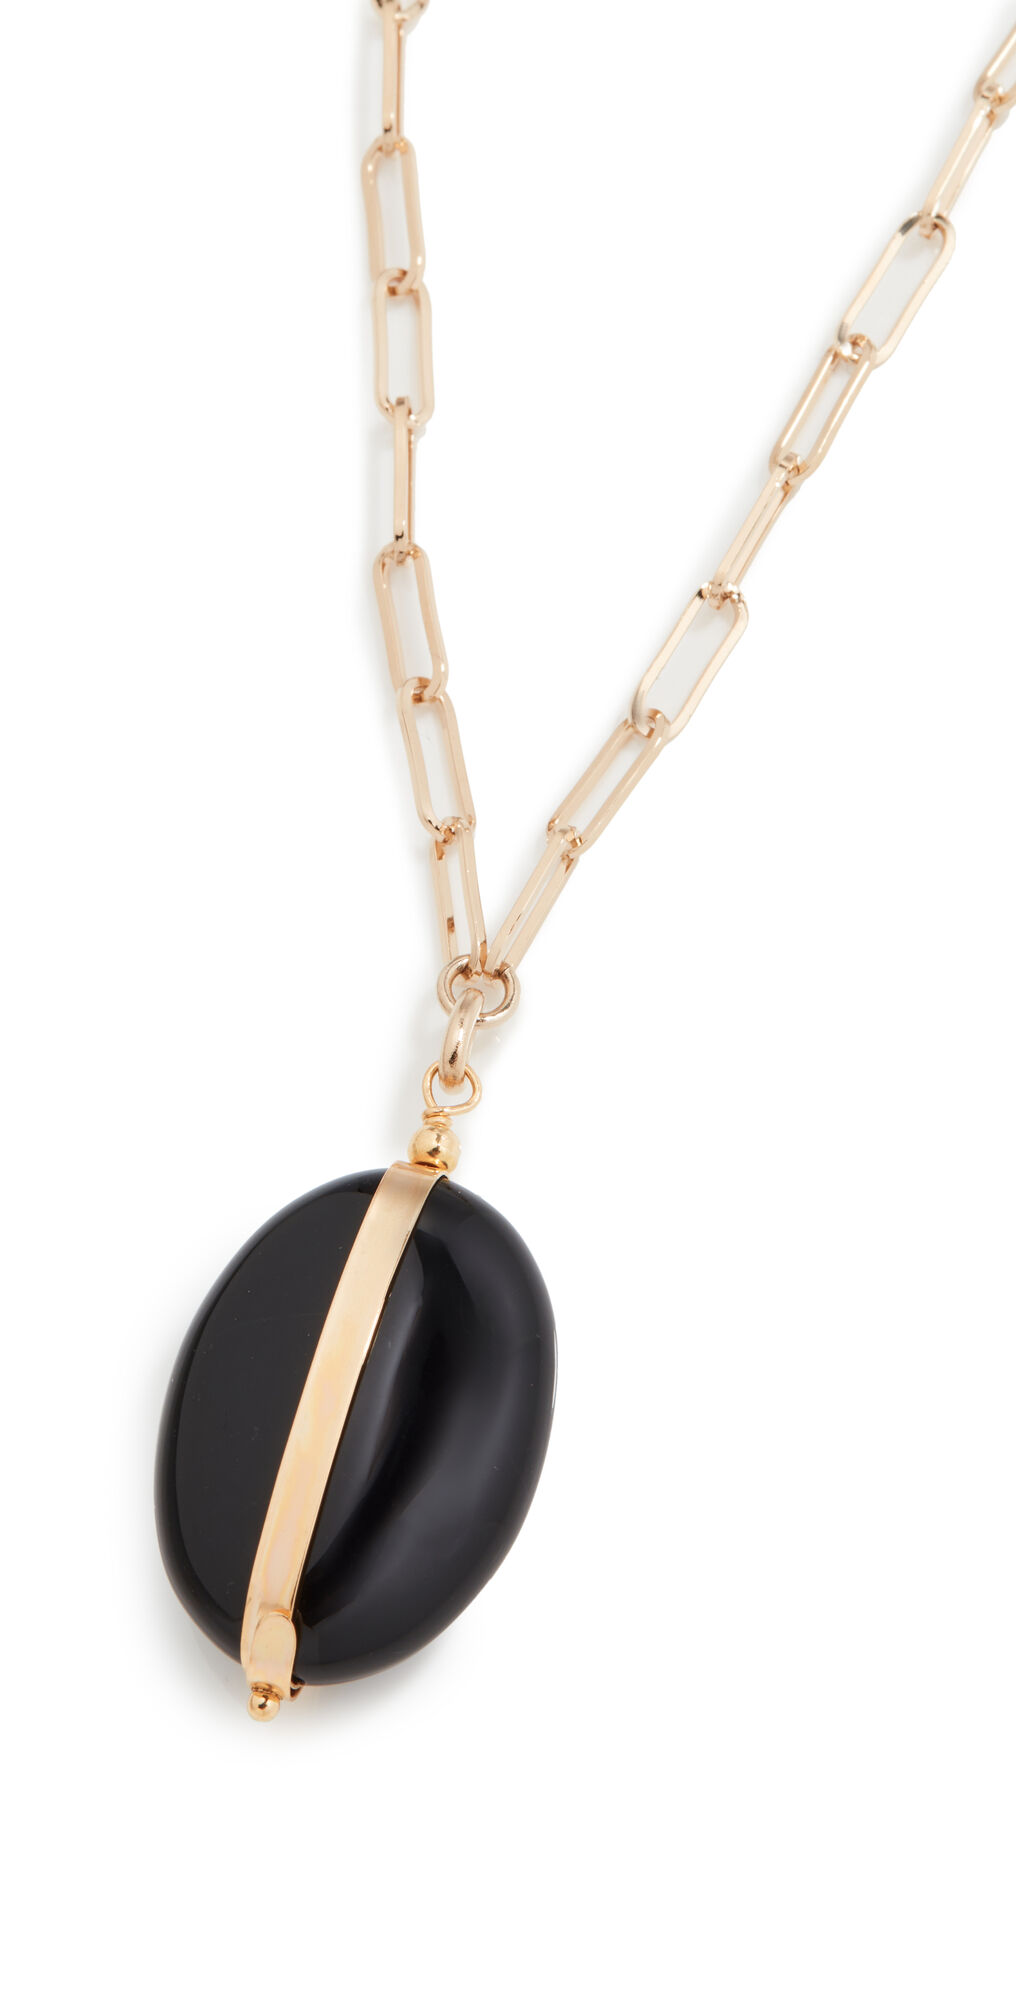 Isabel Marant Collier Necklace Black One Size  Black  size:One Size